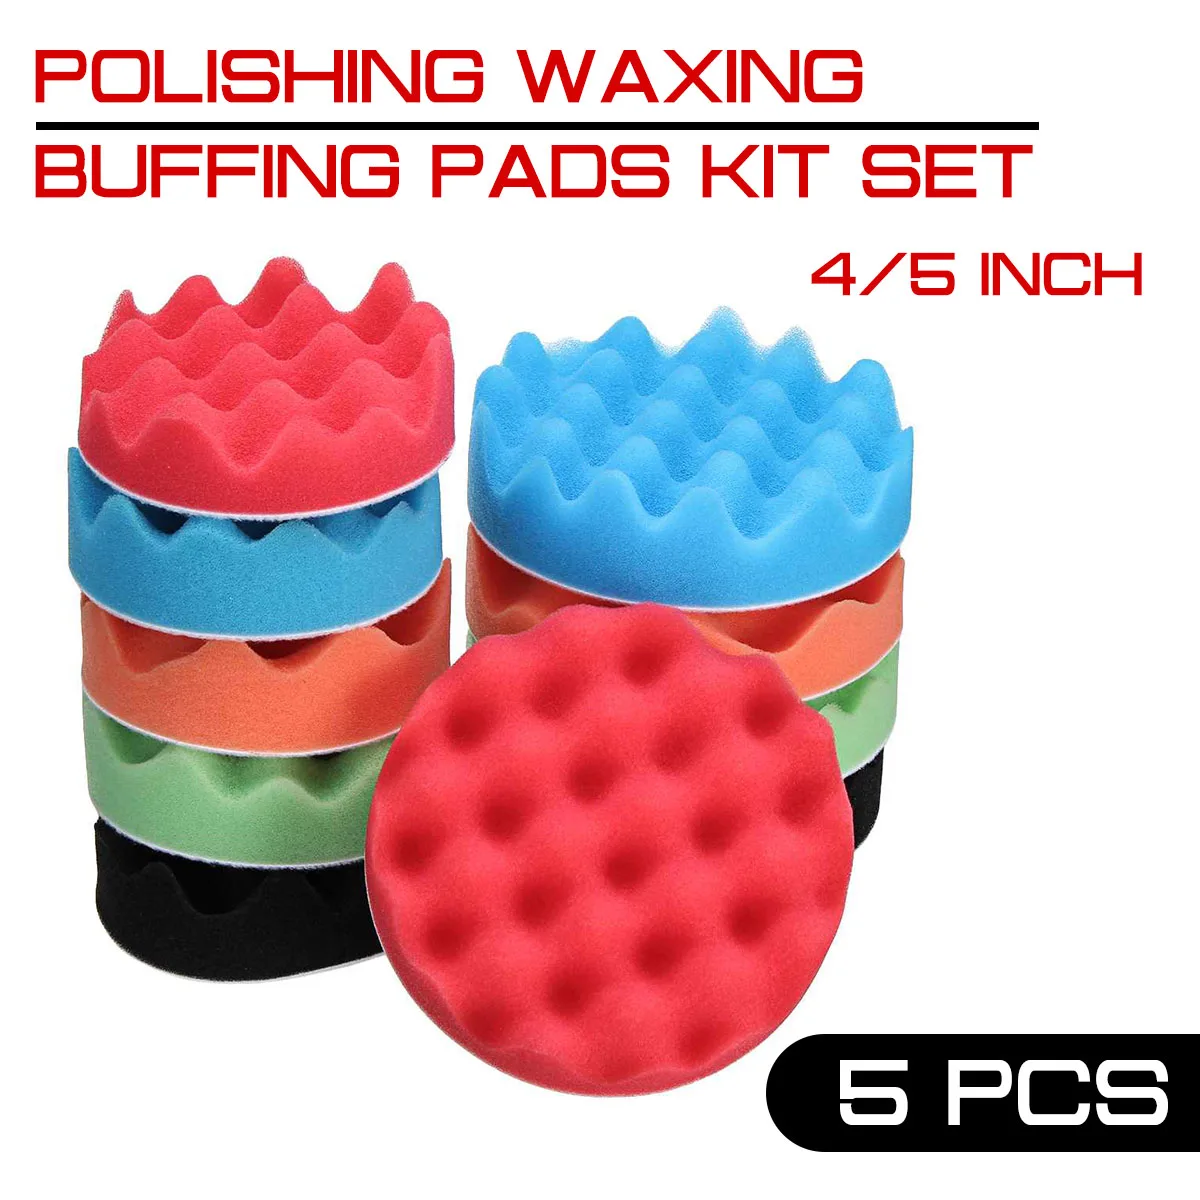 

5Pcs Sponge 4"/5" Polishing Waxing Buffing Pads Kit Set Compound For Auto Car Furniture